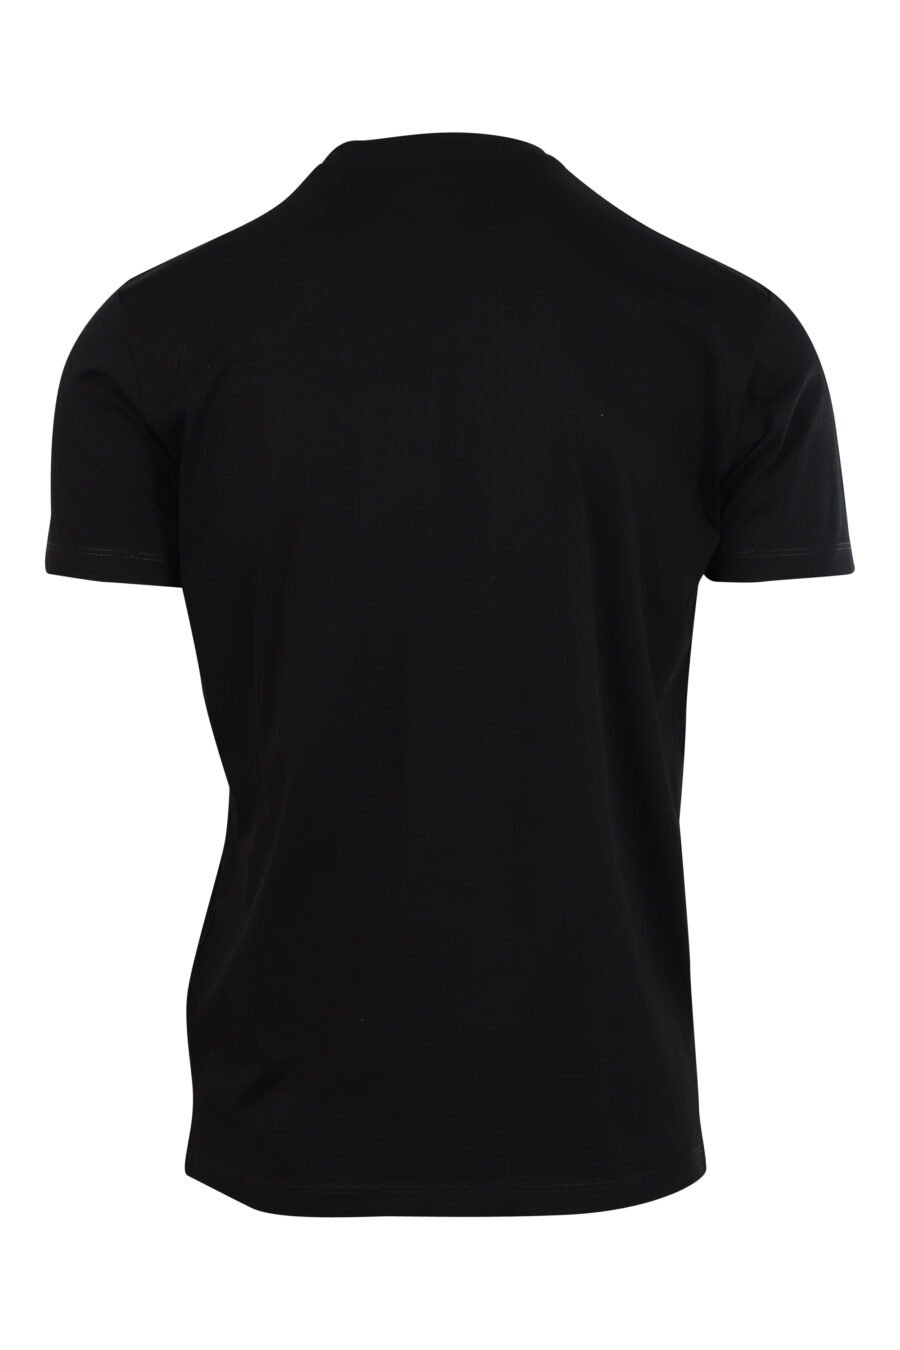 Camiseta negra con maxilogo gráfico hoja delineada - 8052134941010 2